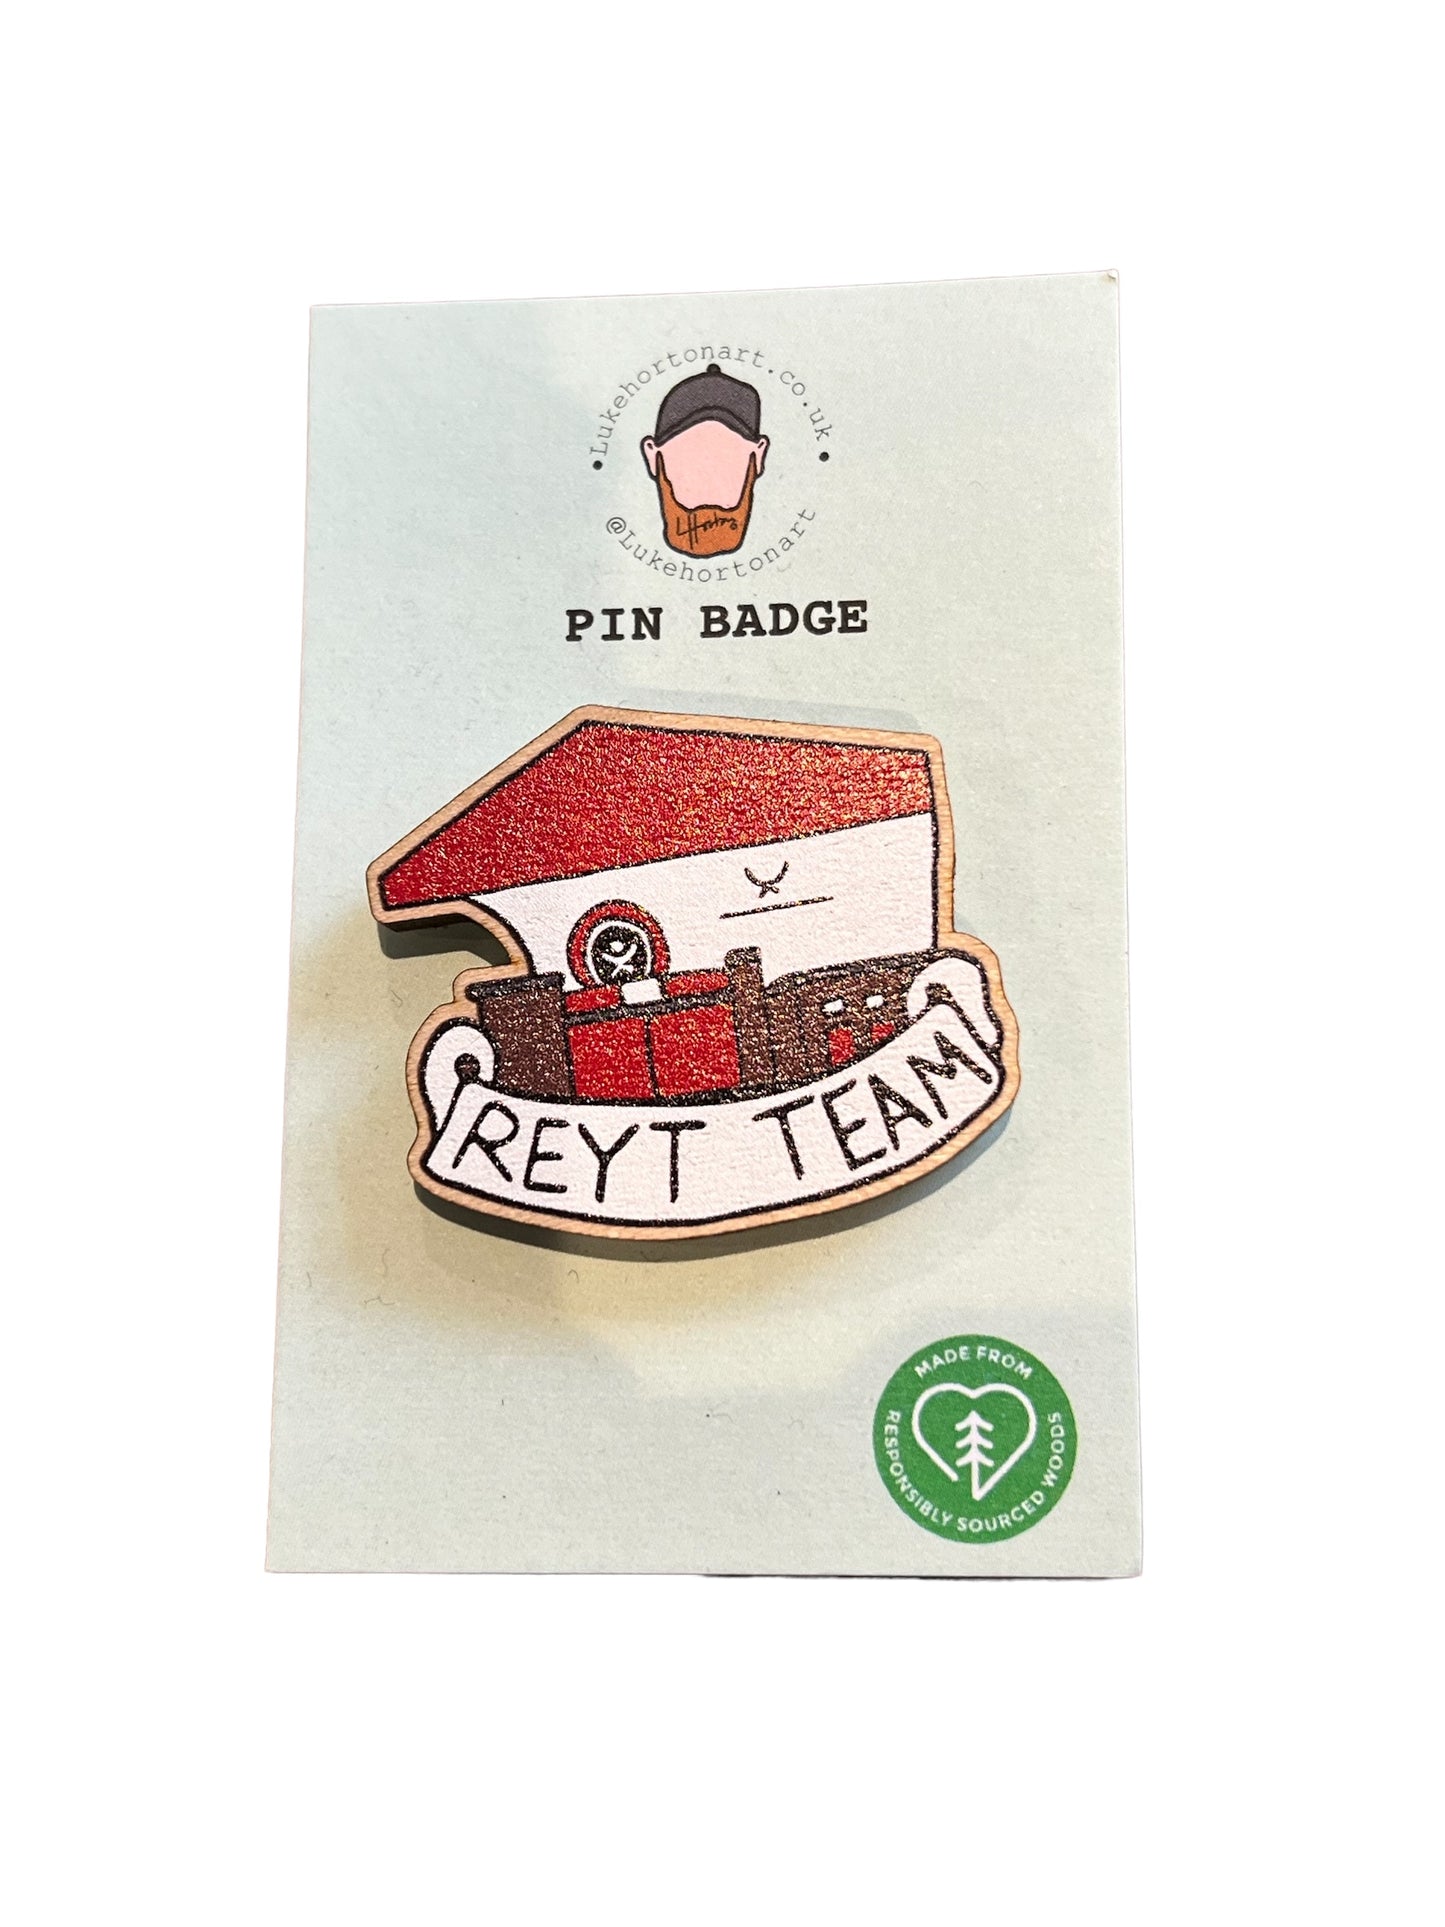 SUFC Reyt Team - ECO Pin Badge - LukeHorton Art